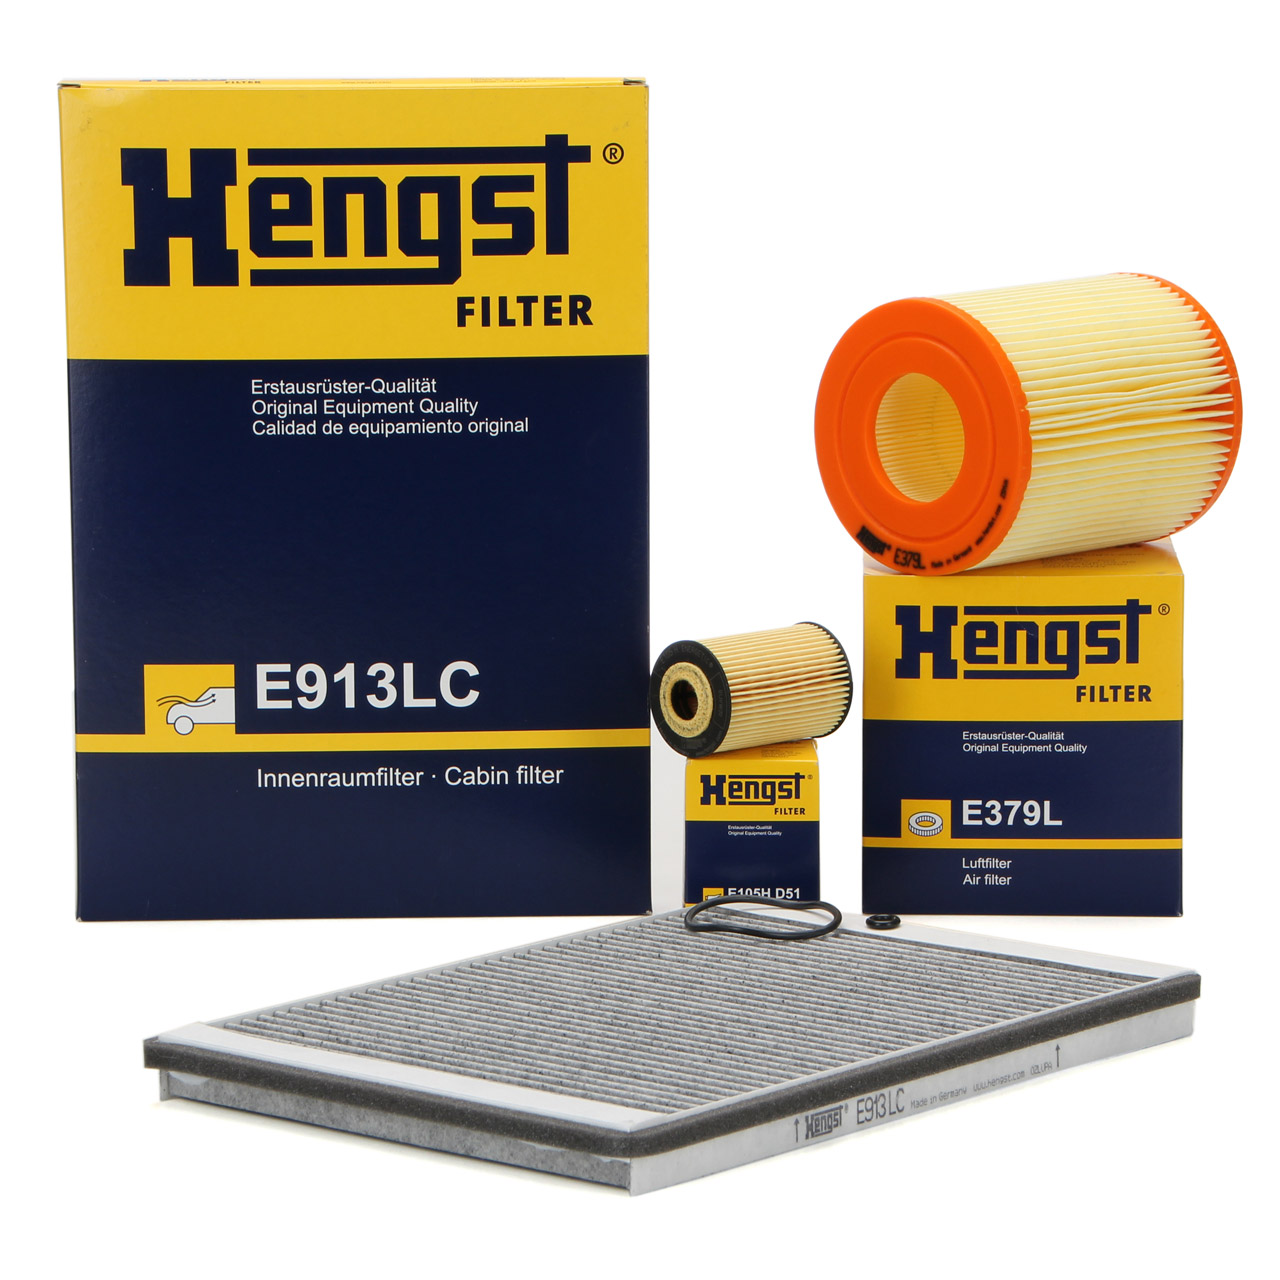 HENGST Filterset MERCEDES A-Klasse W168 A140-210 Vaneo 414 1.6 1.9 M166